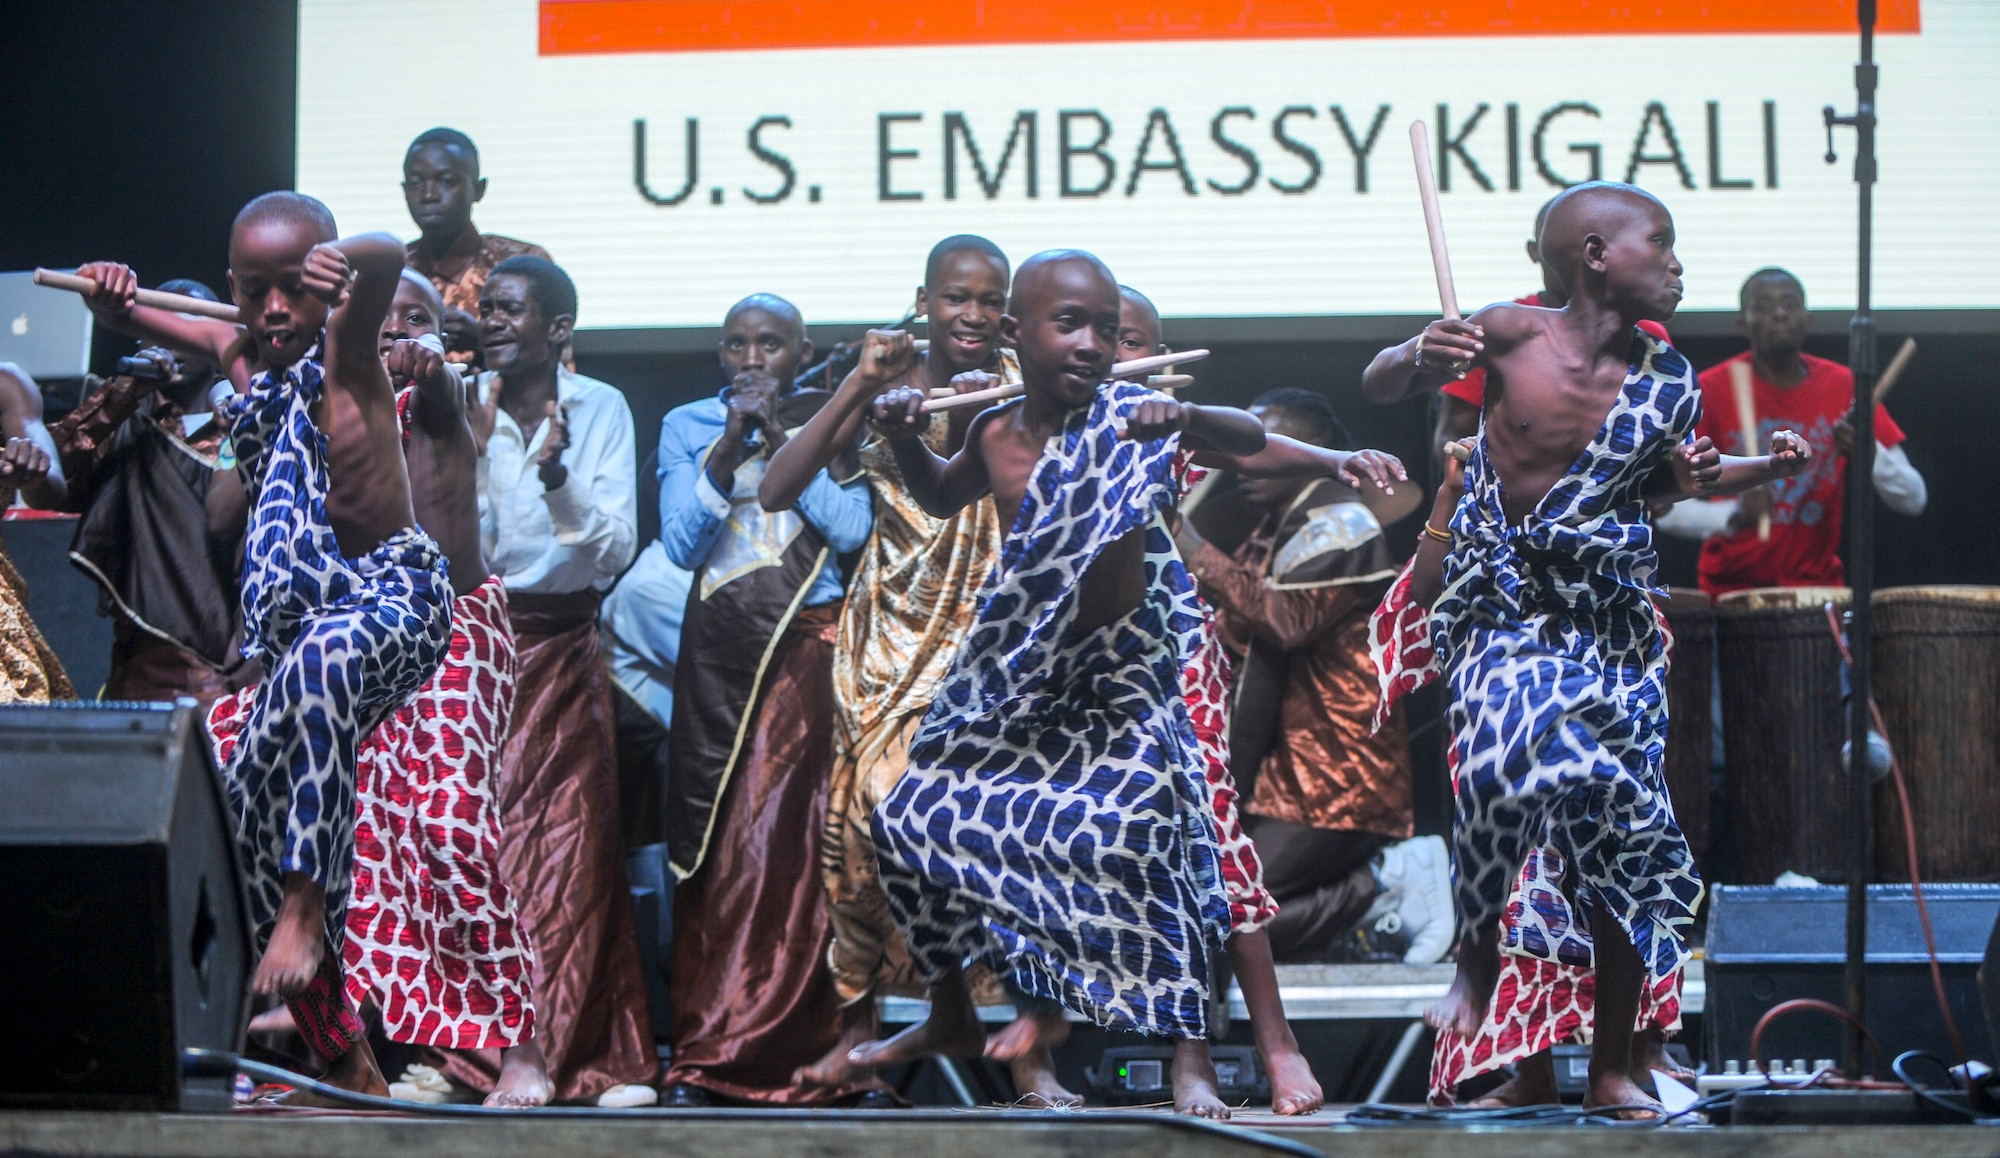 Members of the LEAF Junior Troupe perform a dance during a Tour du Rwanda concert in Kigali, Rwanda, March 2, 2019.